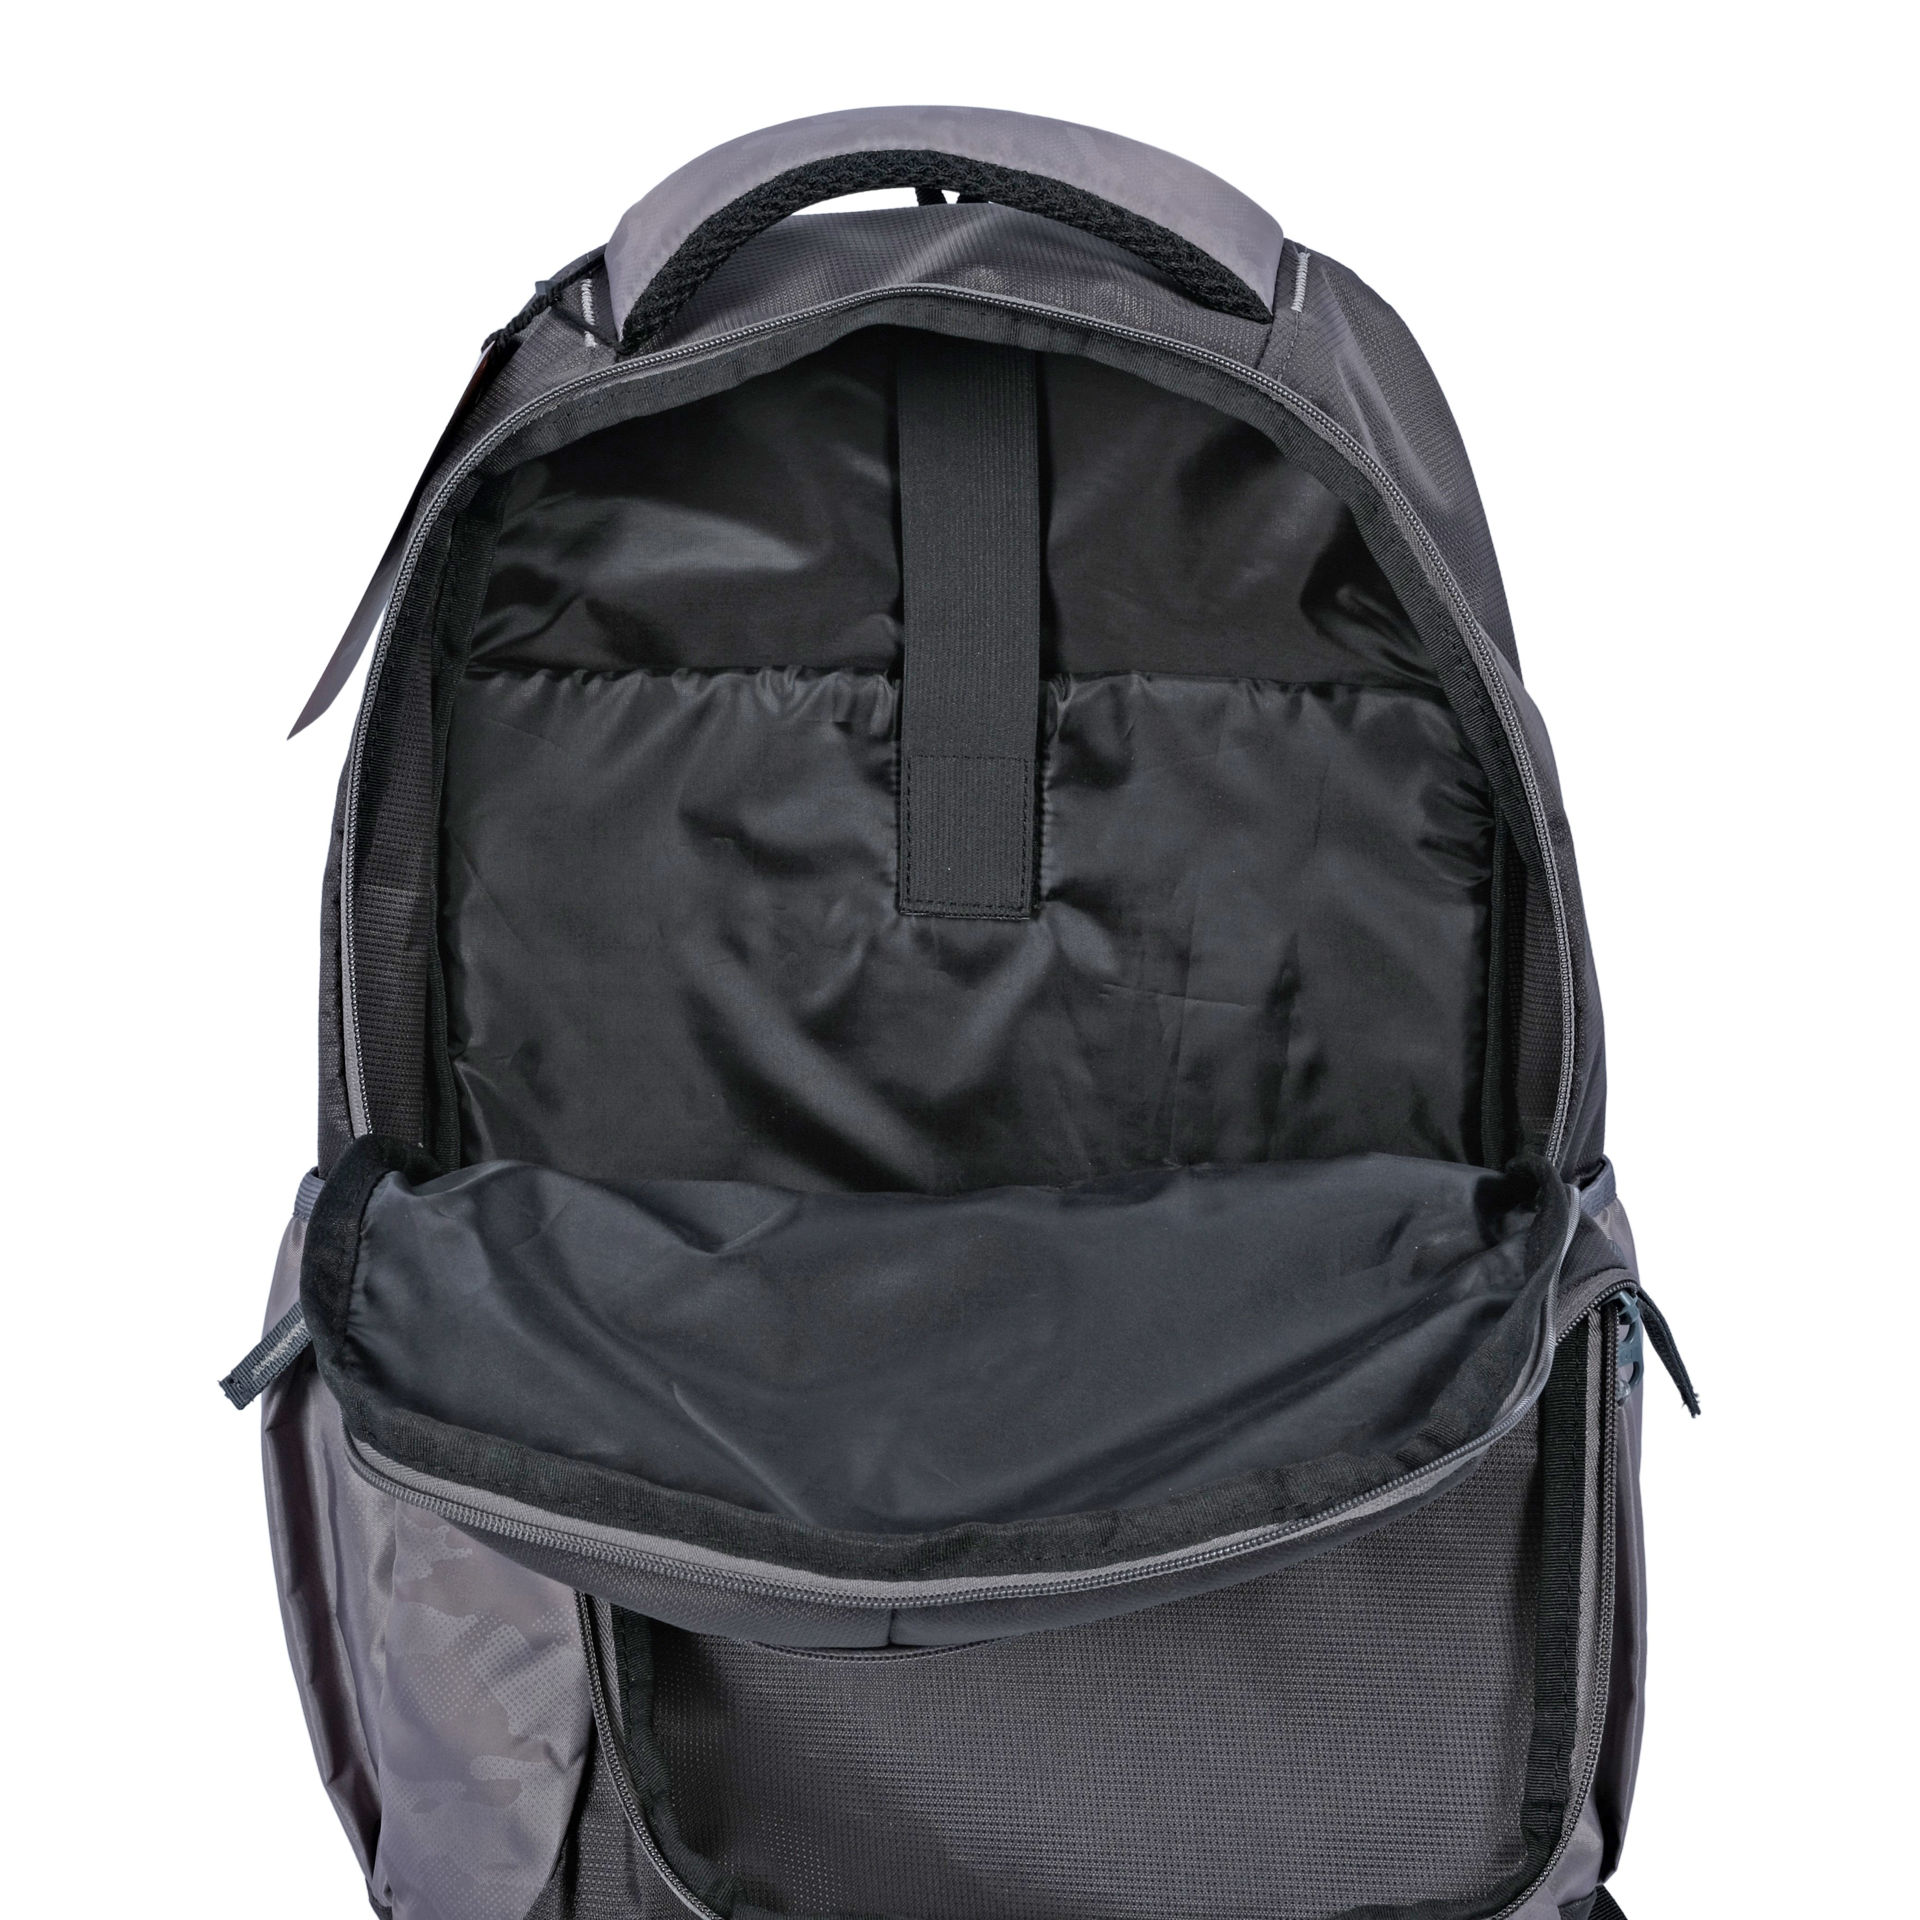 Nu Gran Backpack Near Me From Best E-Commerce | Best Nu Gran Camouflage Printed Laptop Backpack Dubai, UAE